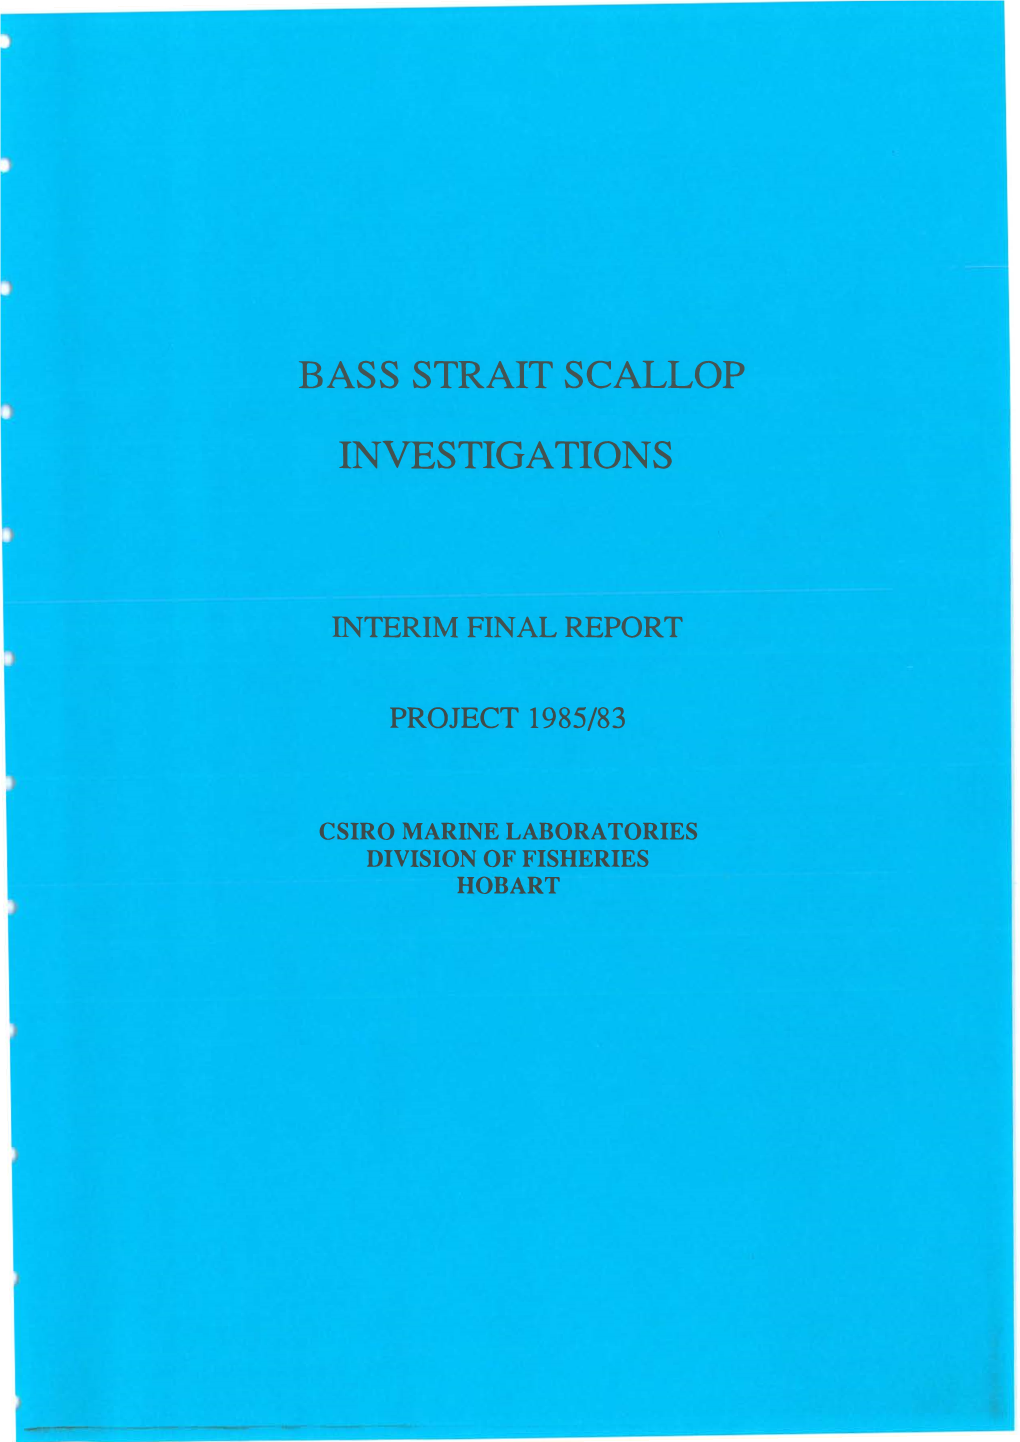 Bass Strait Scallop Investigations